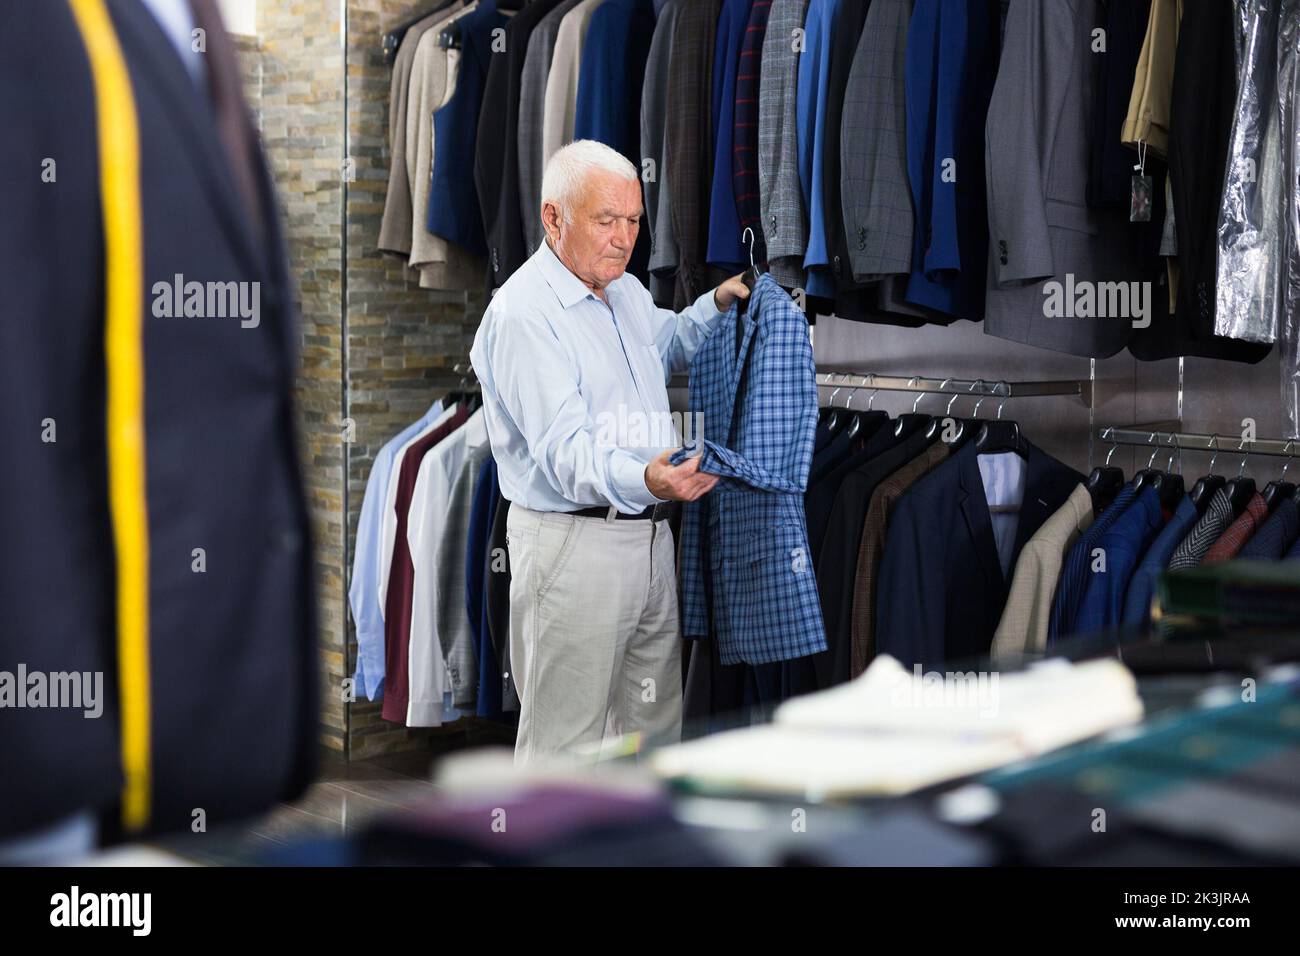 Senior citizen chooses fashionable plaid jacket in clothing store Stock Photo